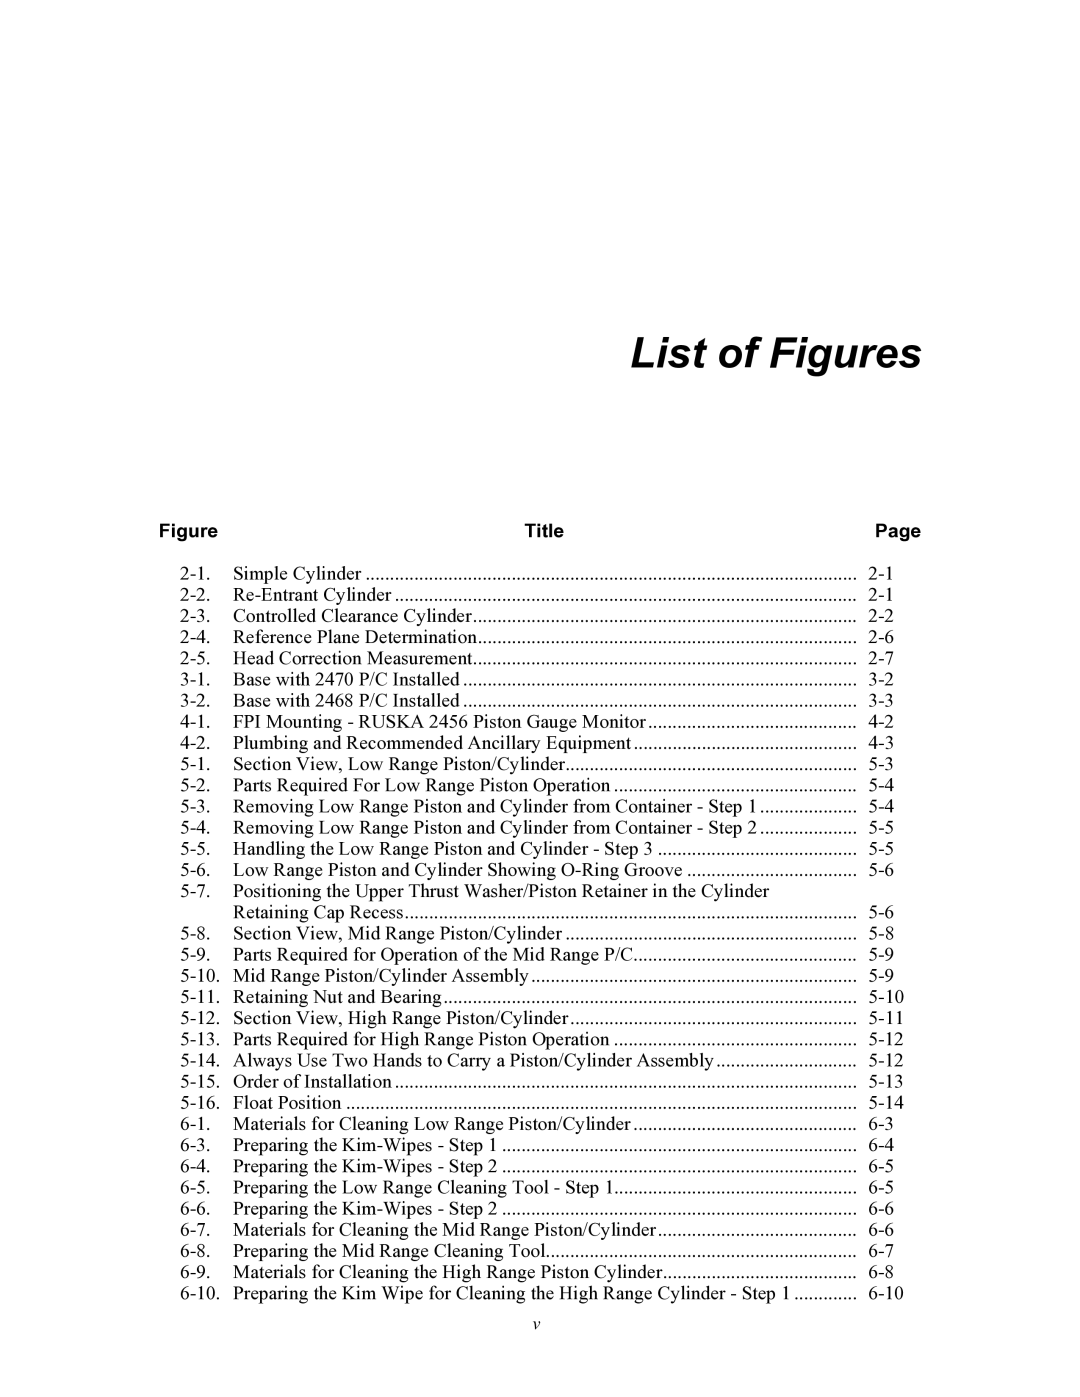 Fluke 2470 specifications List of Figures 